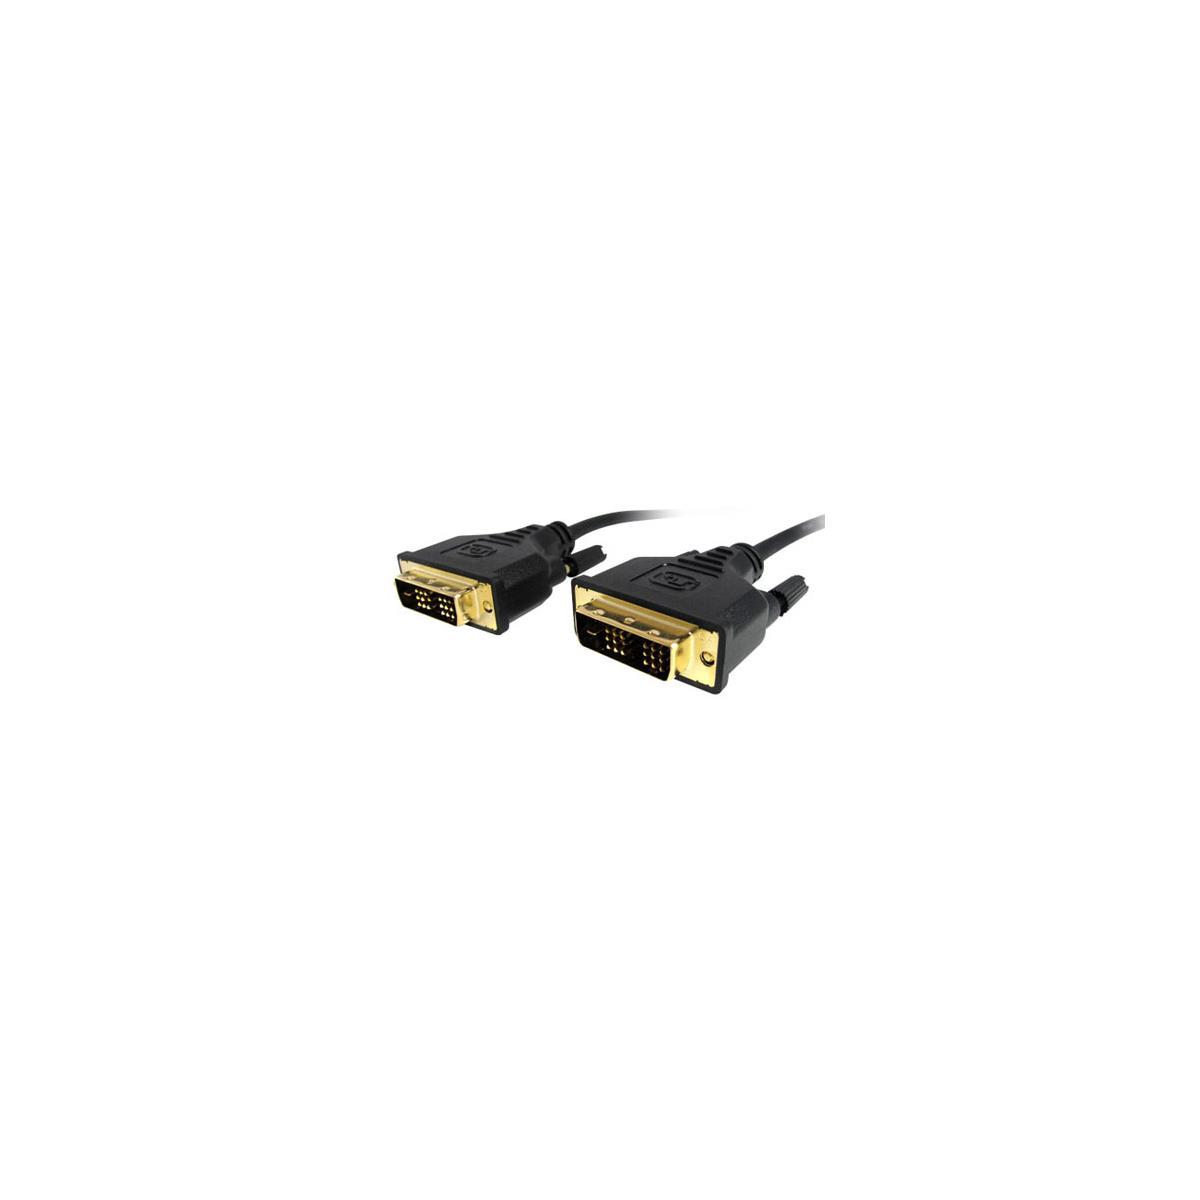 Image of Comprehensive 1.5' MicroFlex Low Profile DVI-D Male to DVI-D Male Cable